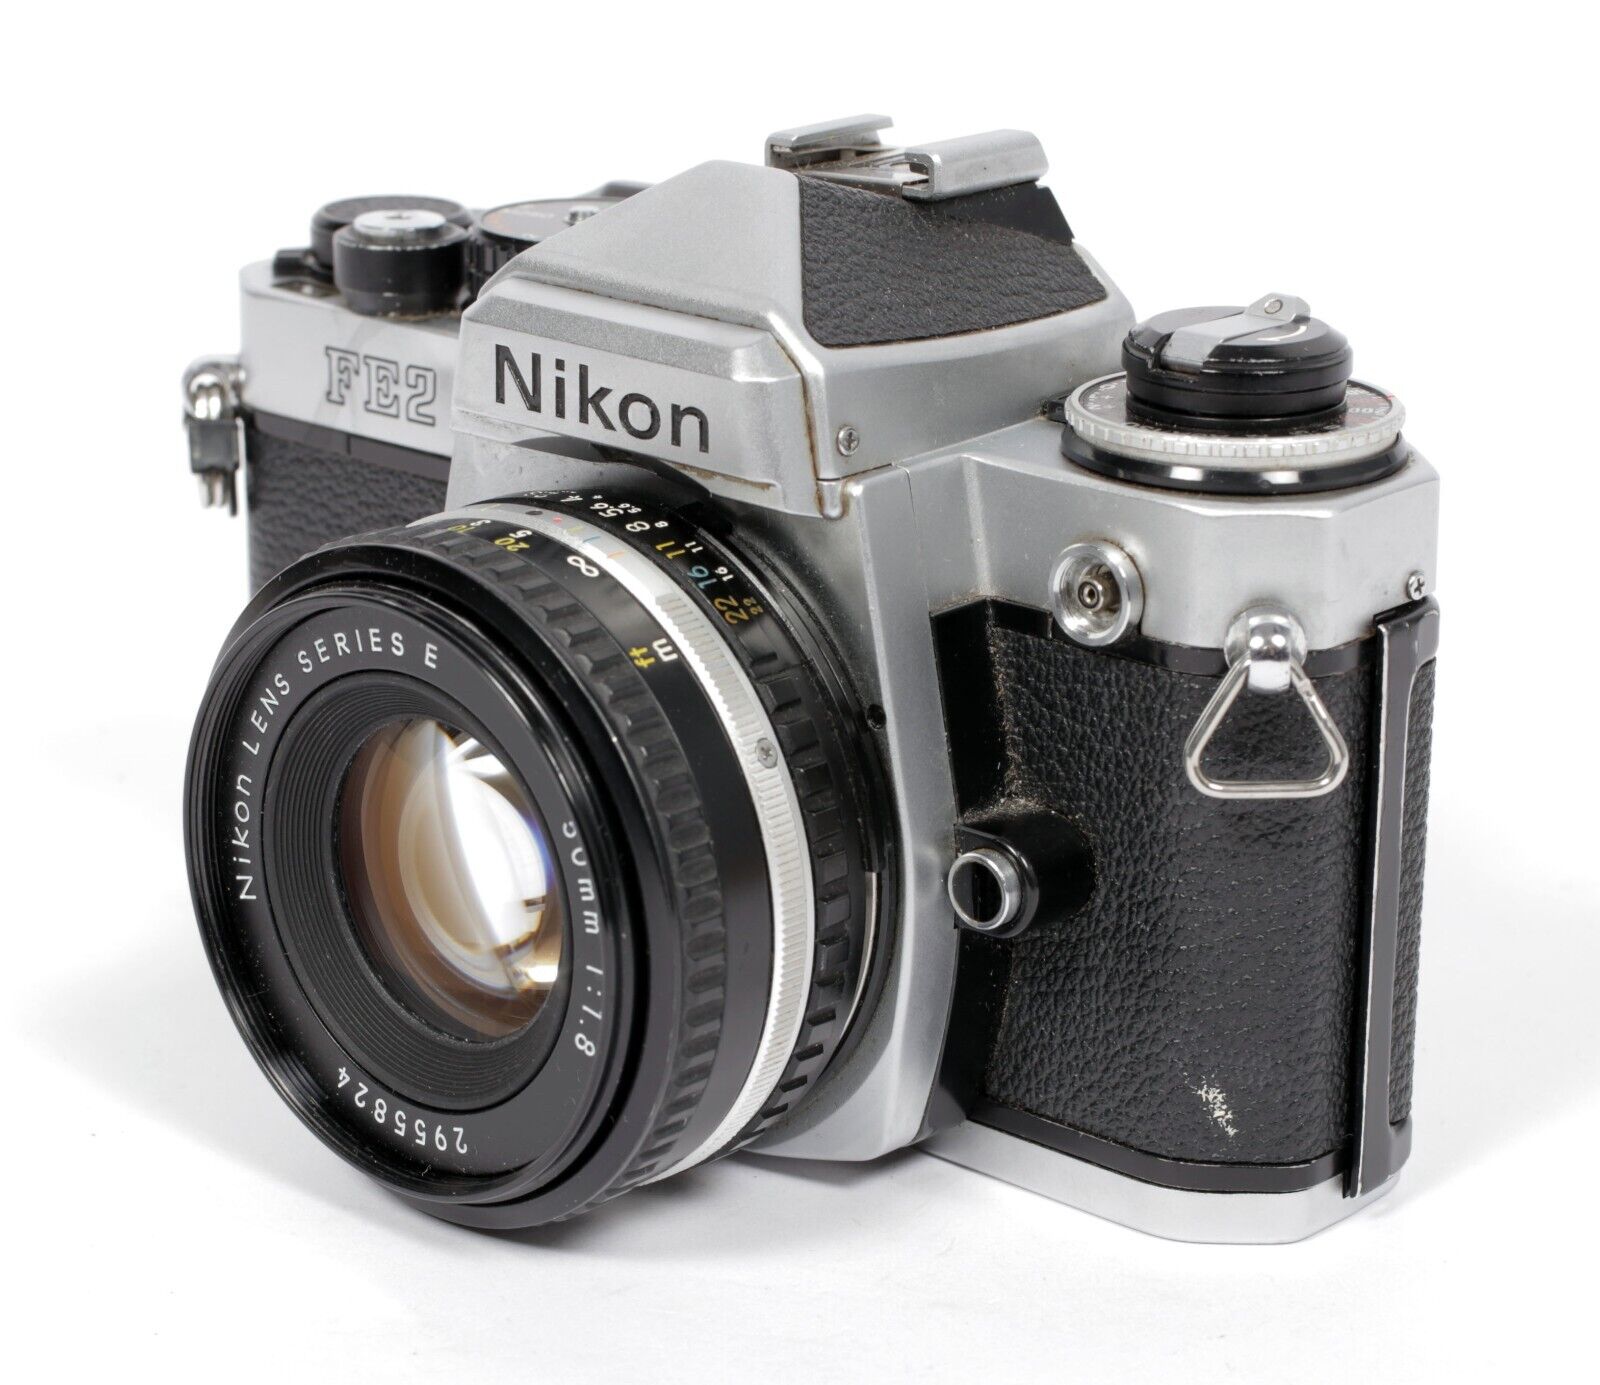 Nikon FE2 35mm SLR Film Camera with 50mm F1.8 lens #890 | CatLABS